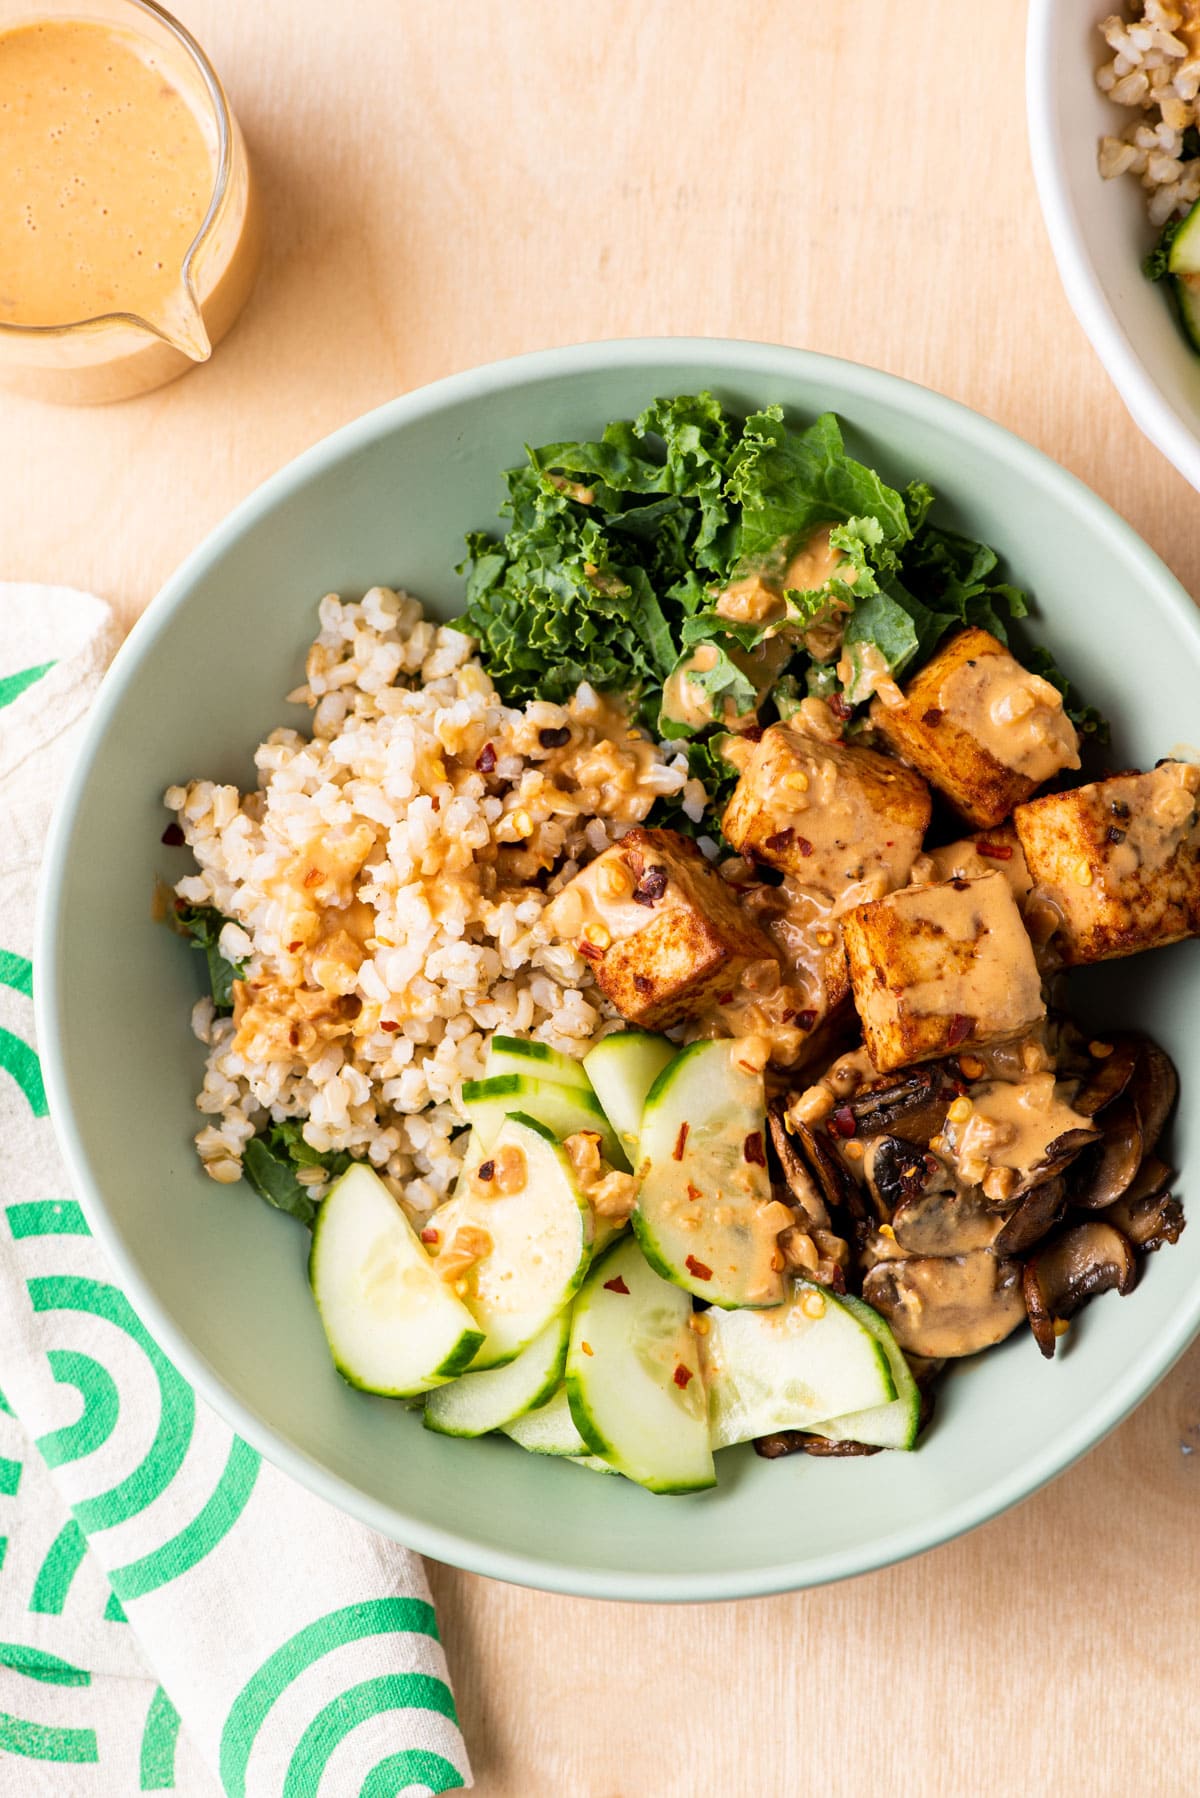 Tofu rice bowl with mushrooms, kale, cucumbers, and peanut sauce.